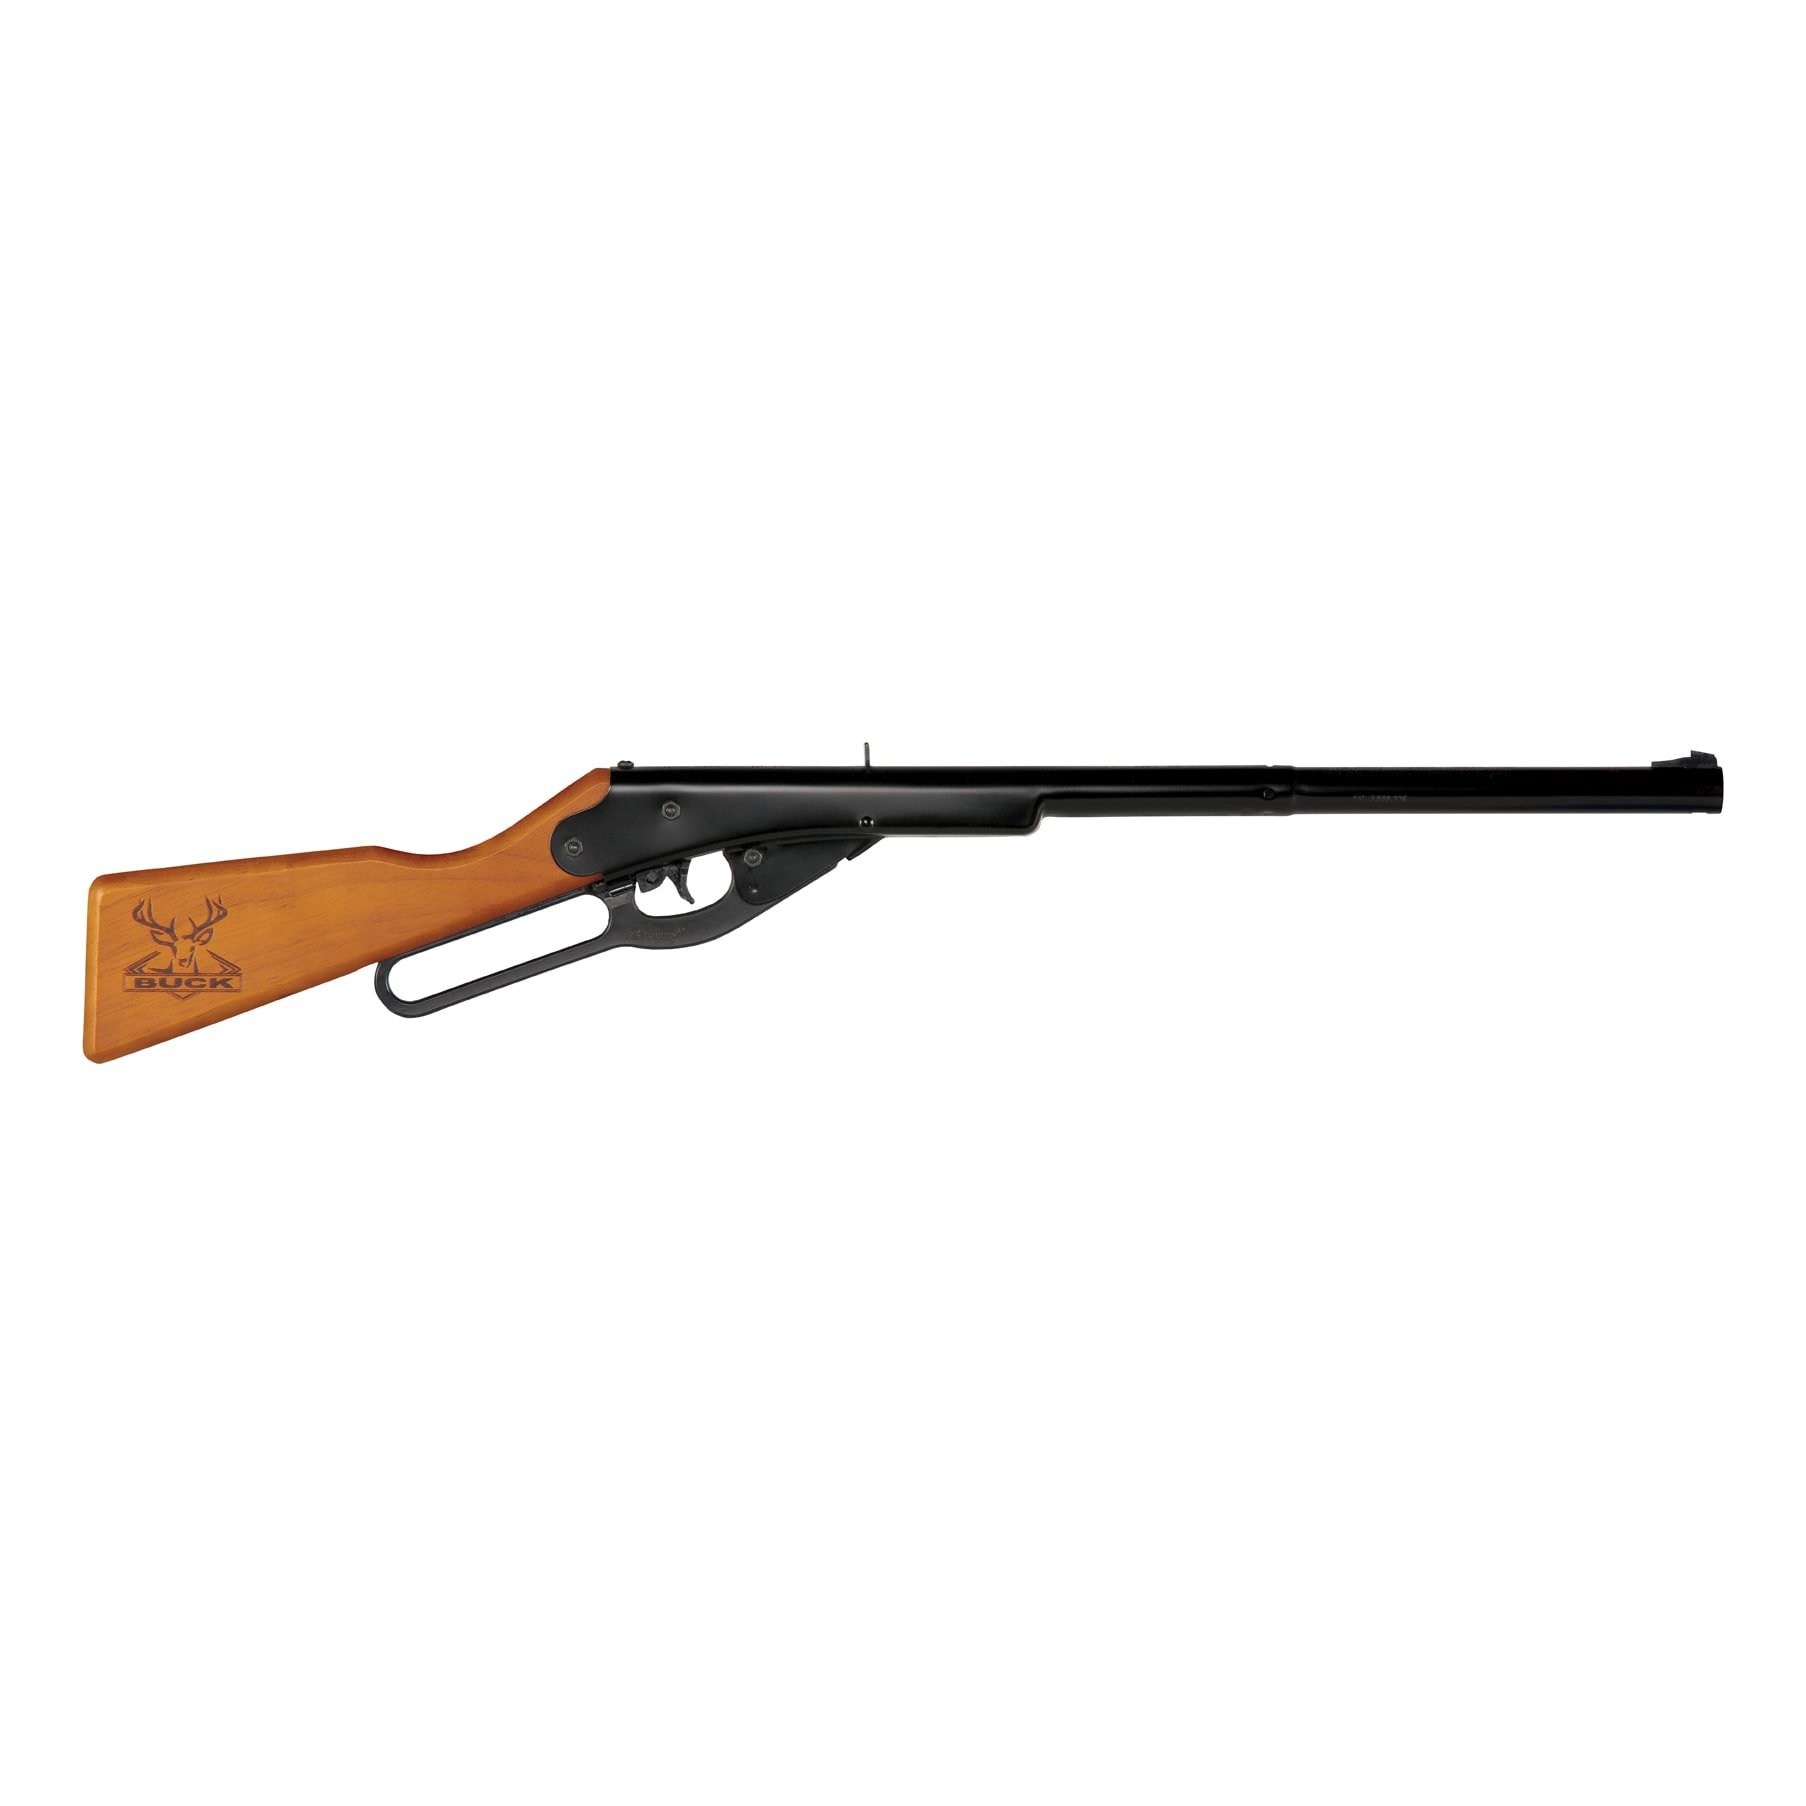 Daisy Model 105 Buck BB Air Rifle